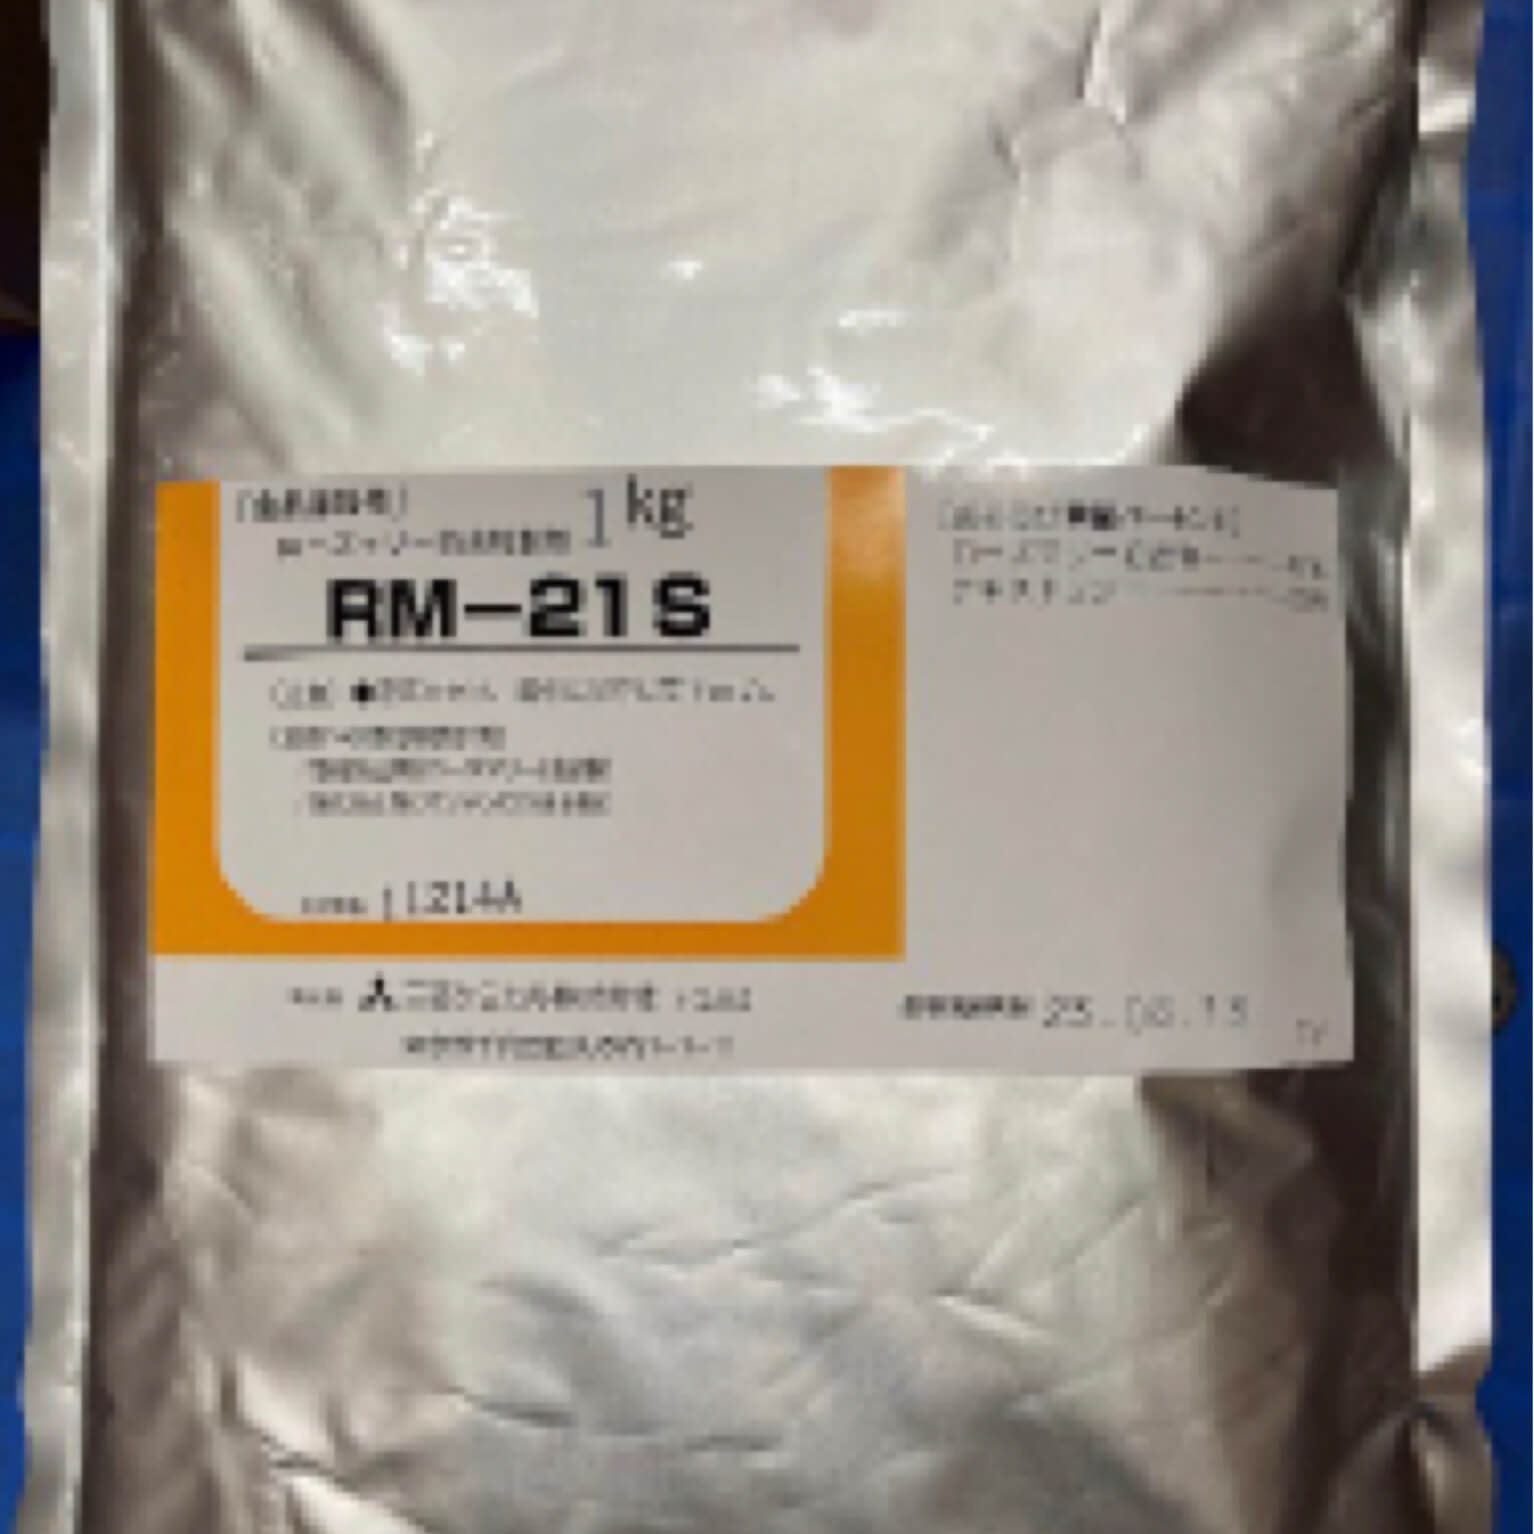 RM-21S (ローズマリー抽出物製剤) 1